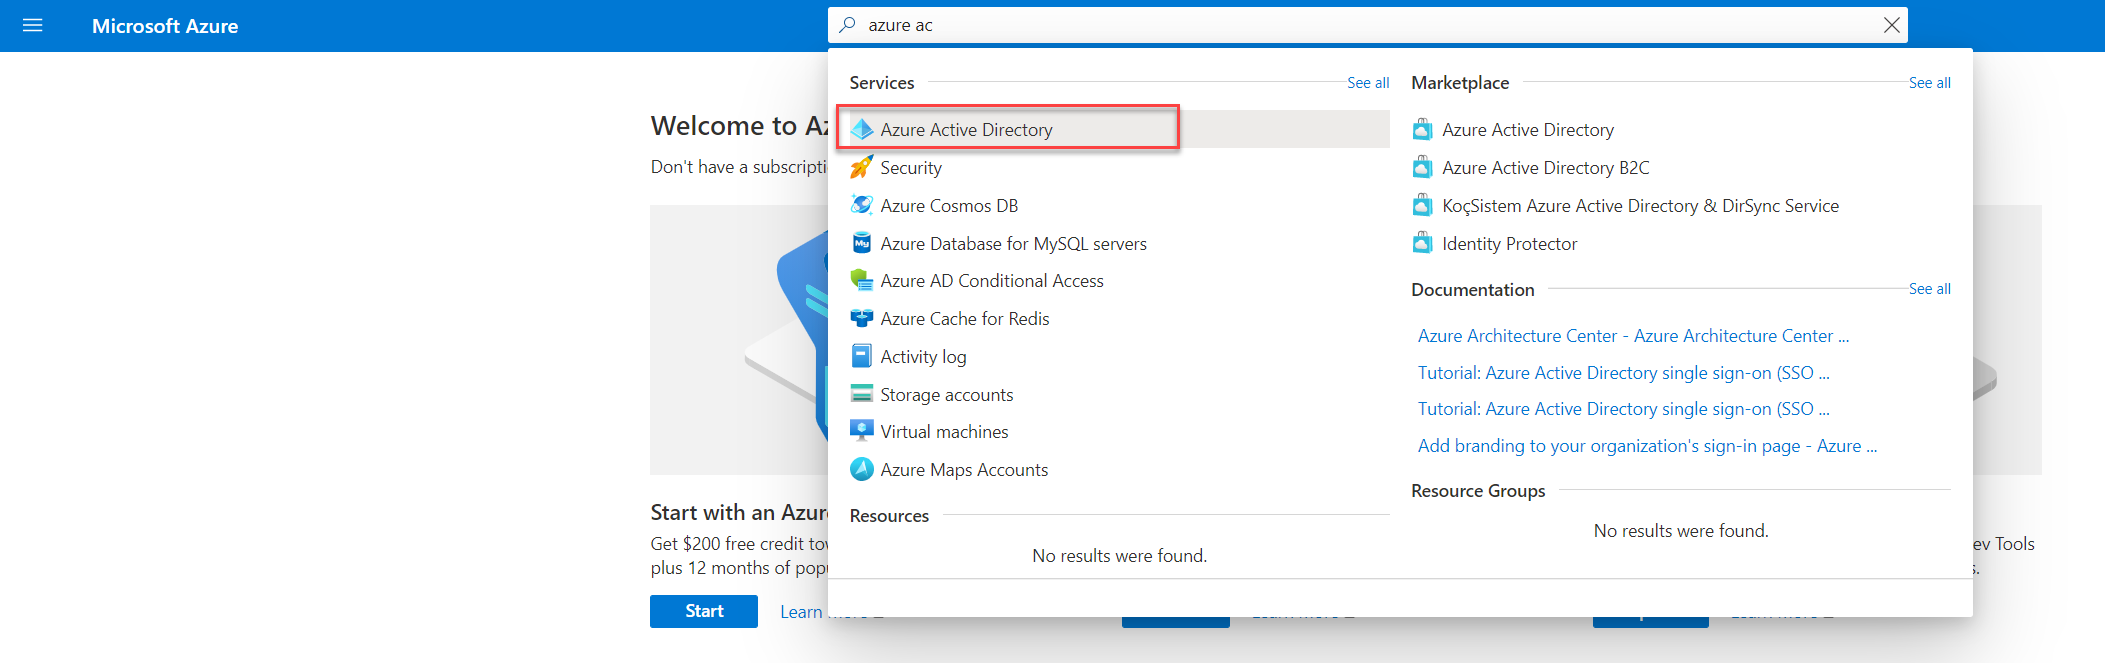 Azure Active Directory Service